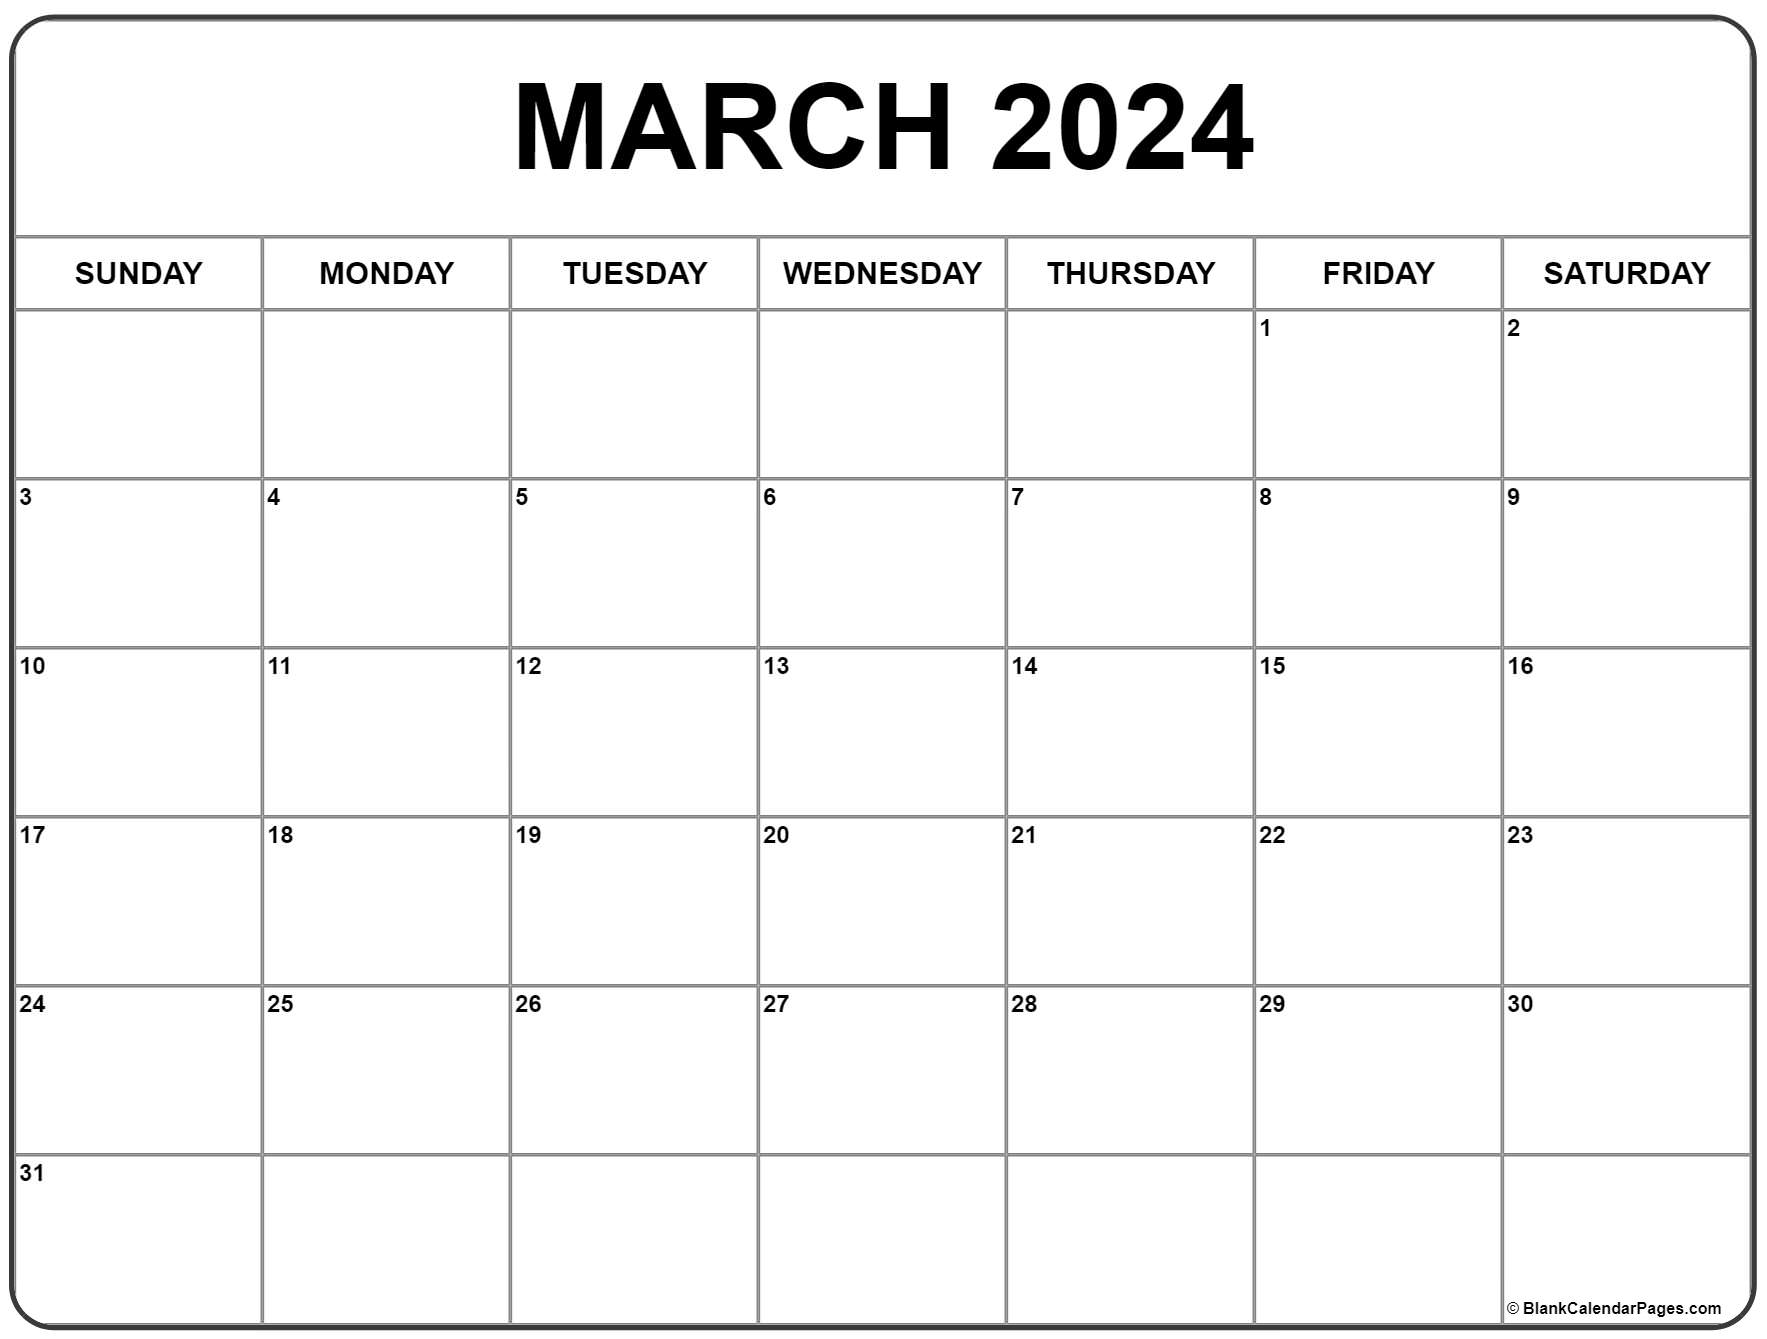 March 2024 Calendar | Free Printable Calendar for March 2024 Calendar Blank Printable